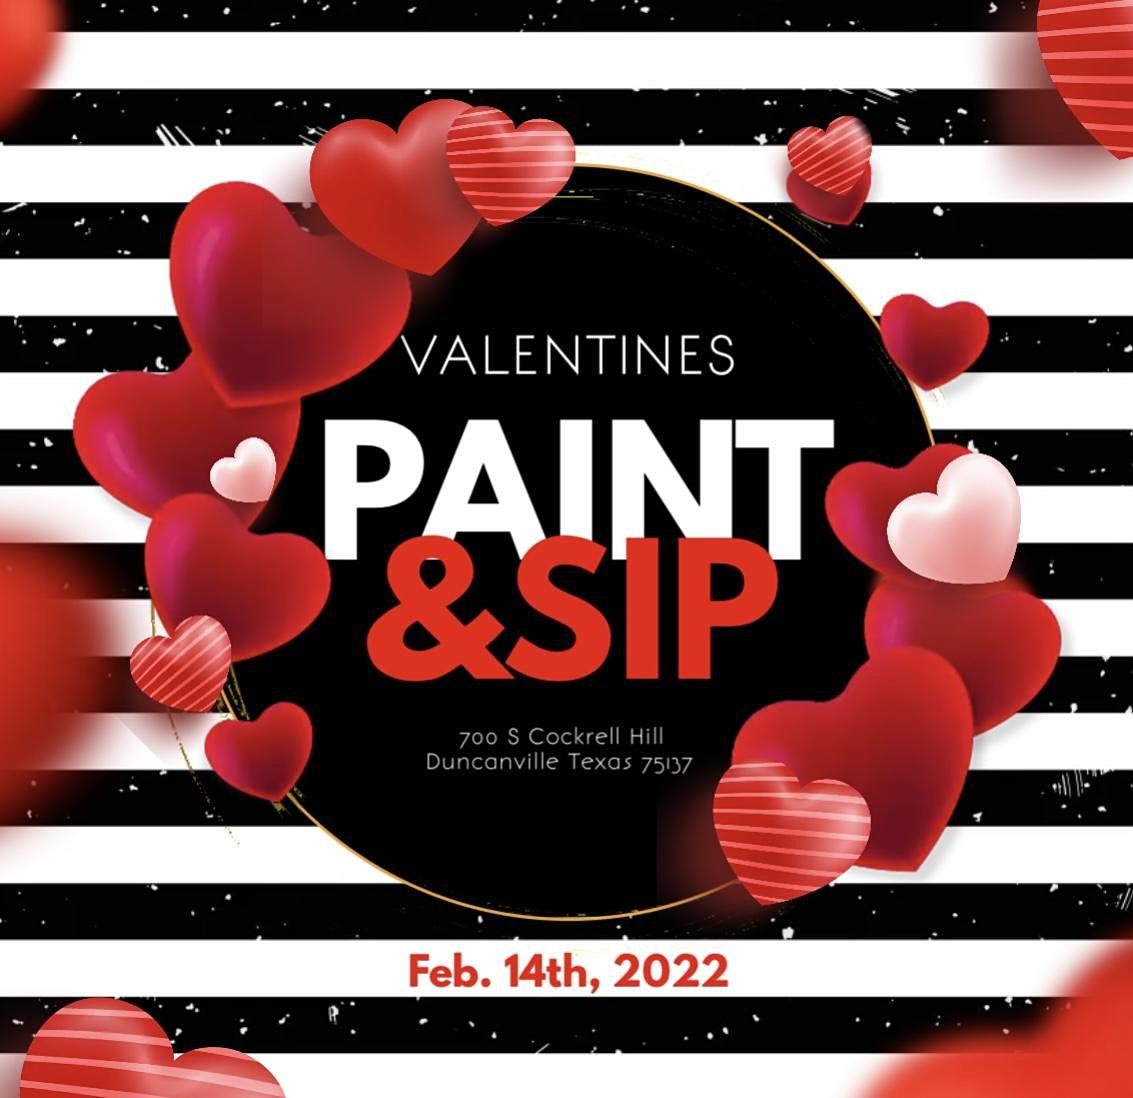 Valentines Paint & Sip